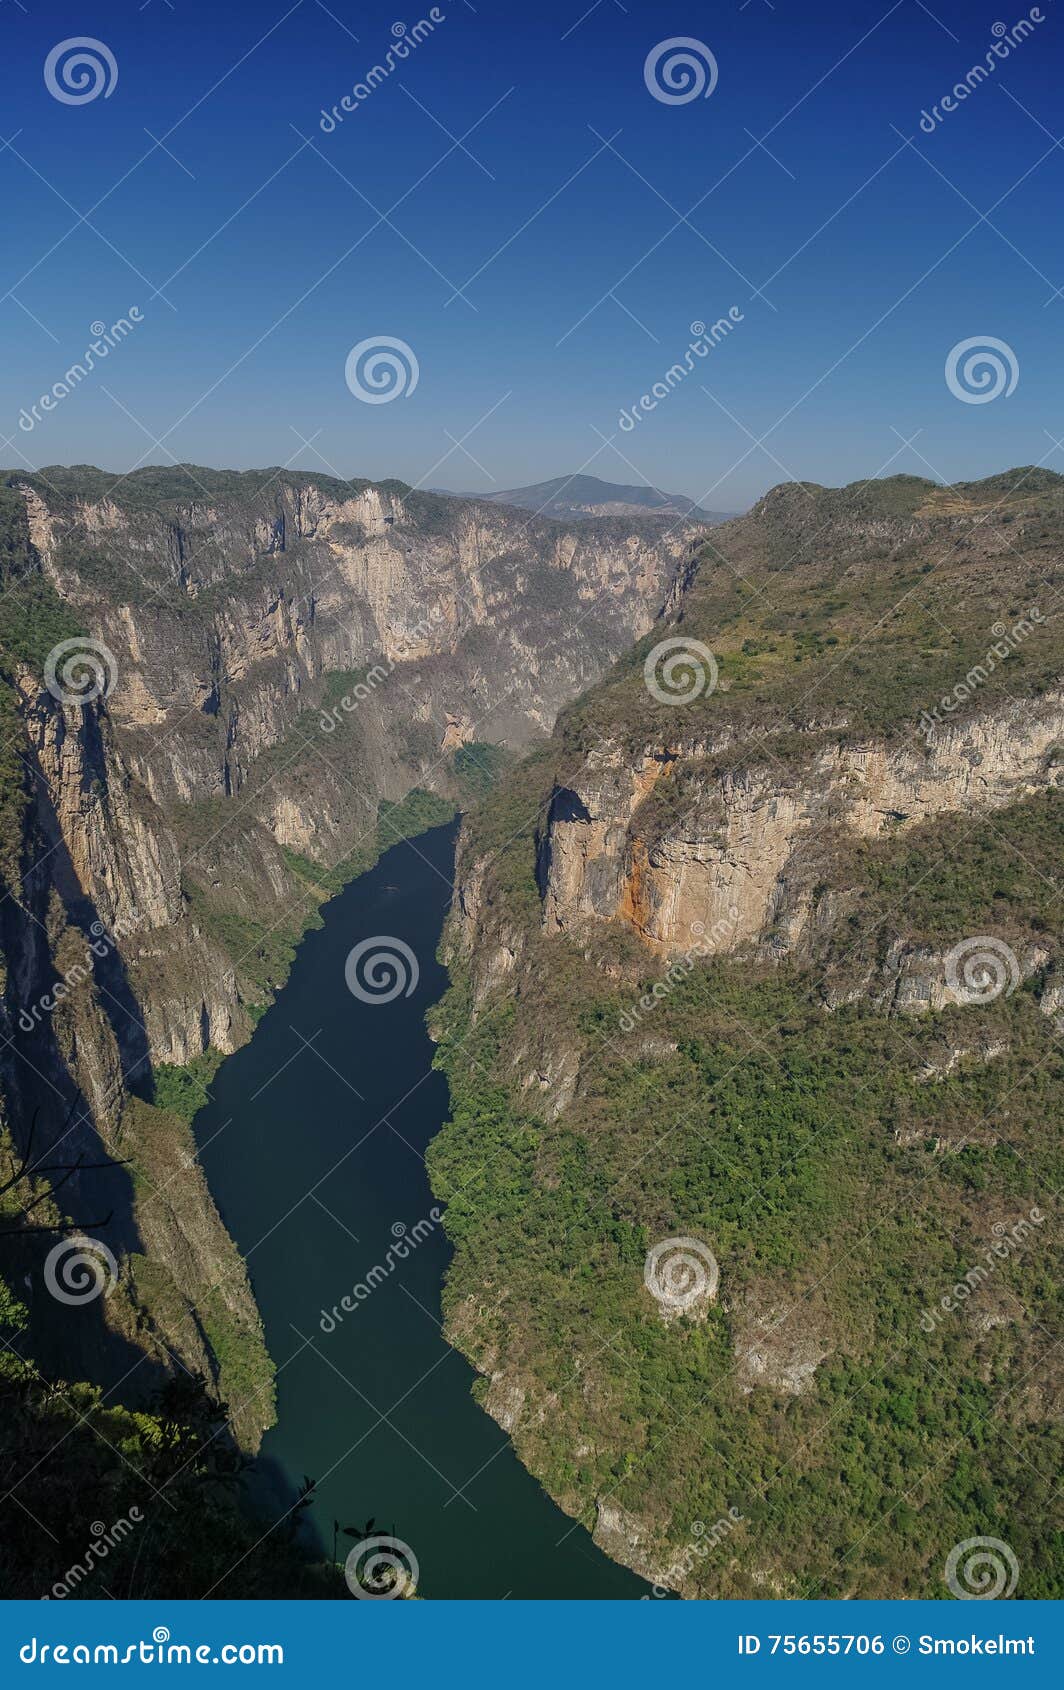 panorama of sumidero canyon from viewpoint. near tuxtla gutierrez in chiapas, mexico